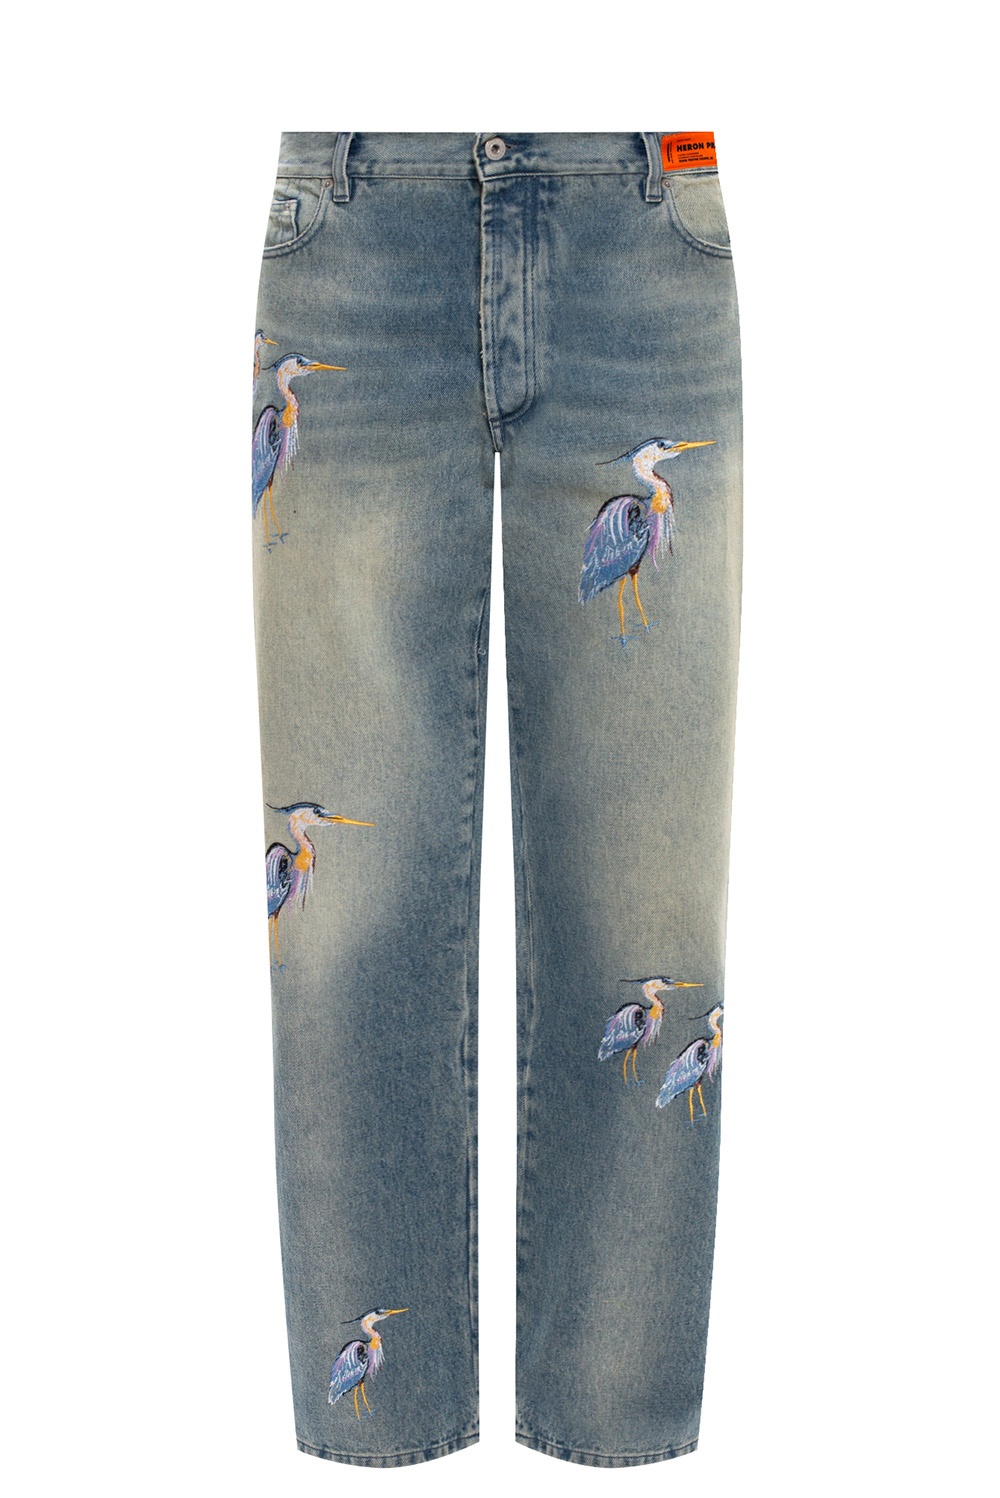 Heron Preston Embroidered jeans